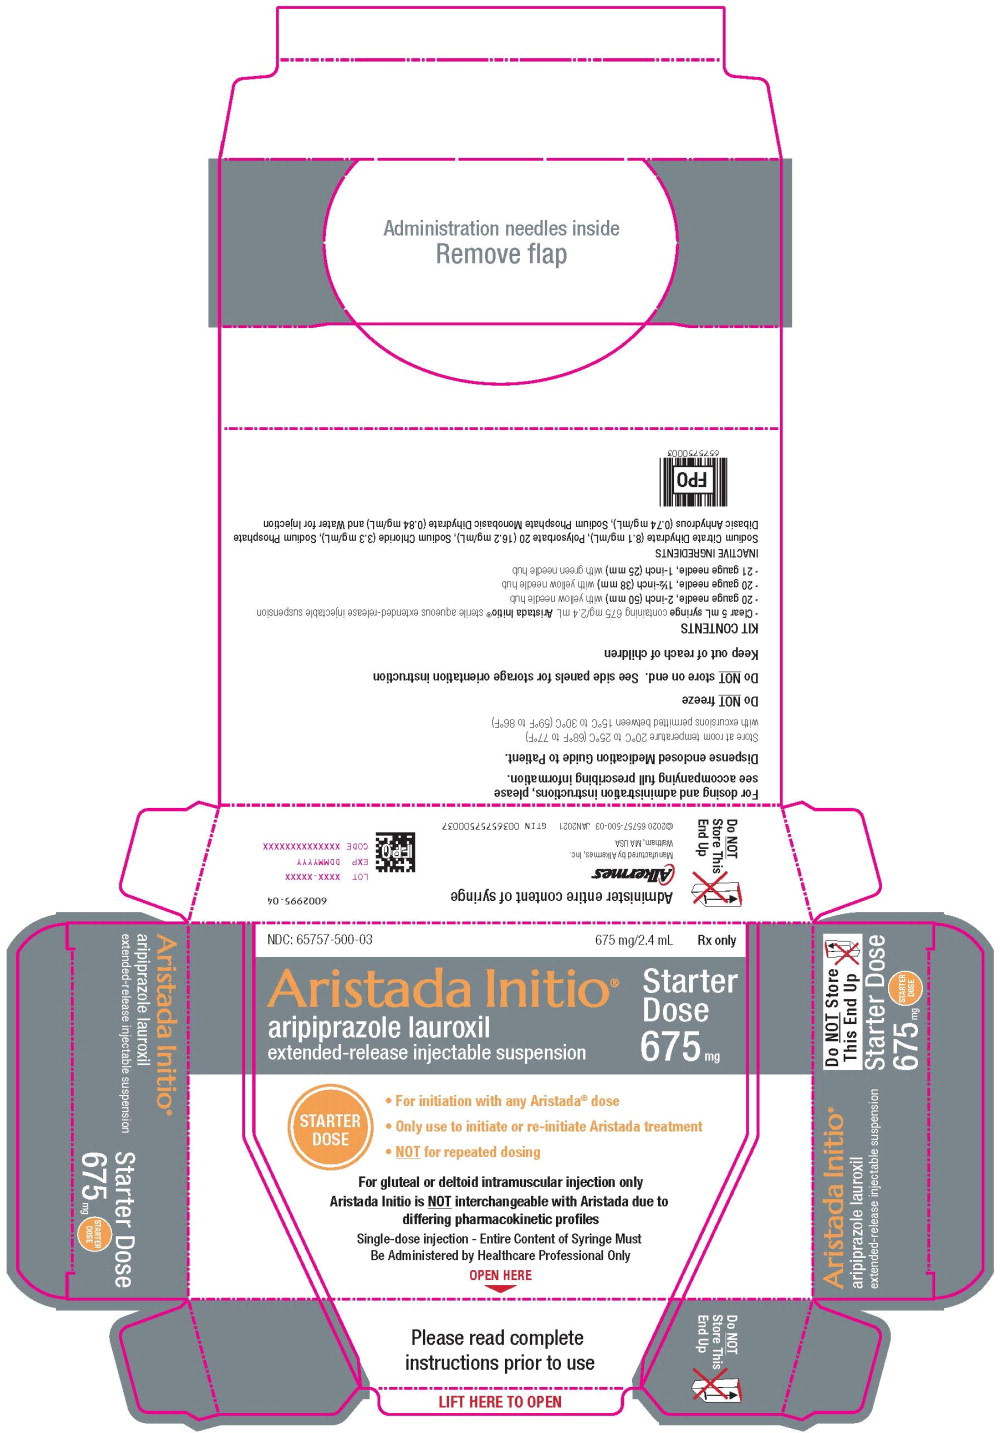 Principal Display Panel - Aristada Initio Carton Label
